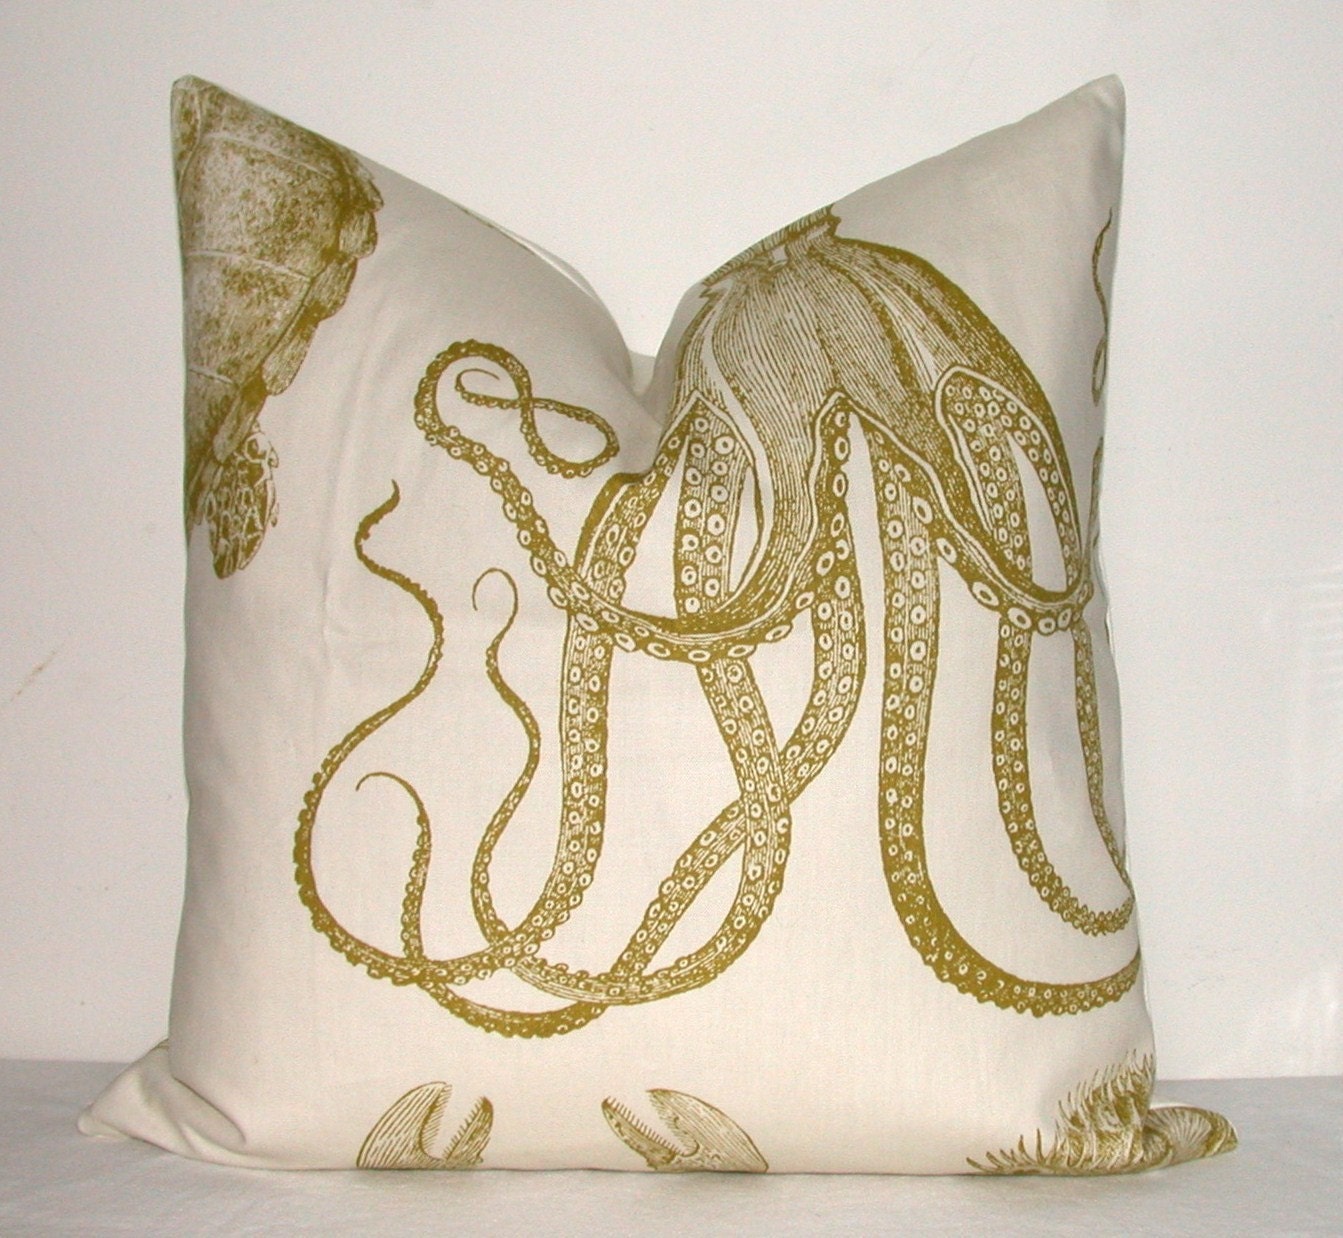 Designer Pillow - Decorative Pillow - Throw Pillow - Sea Creature - 18x18 inch - Nautical